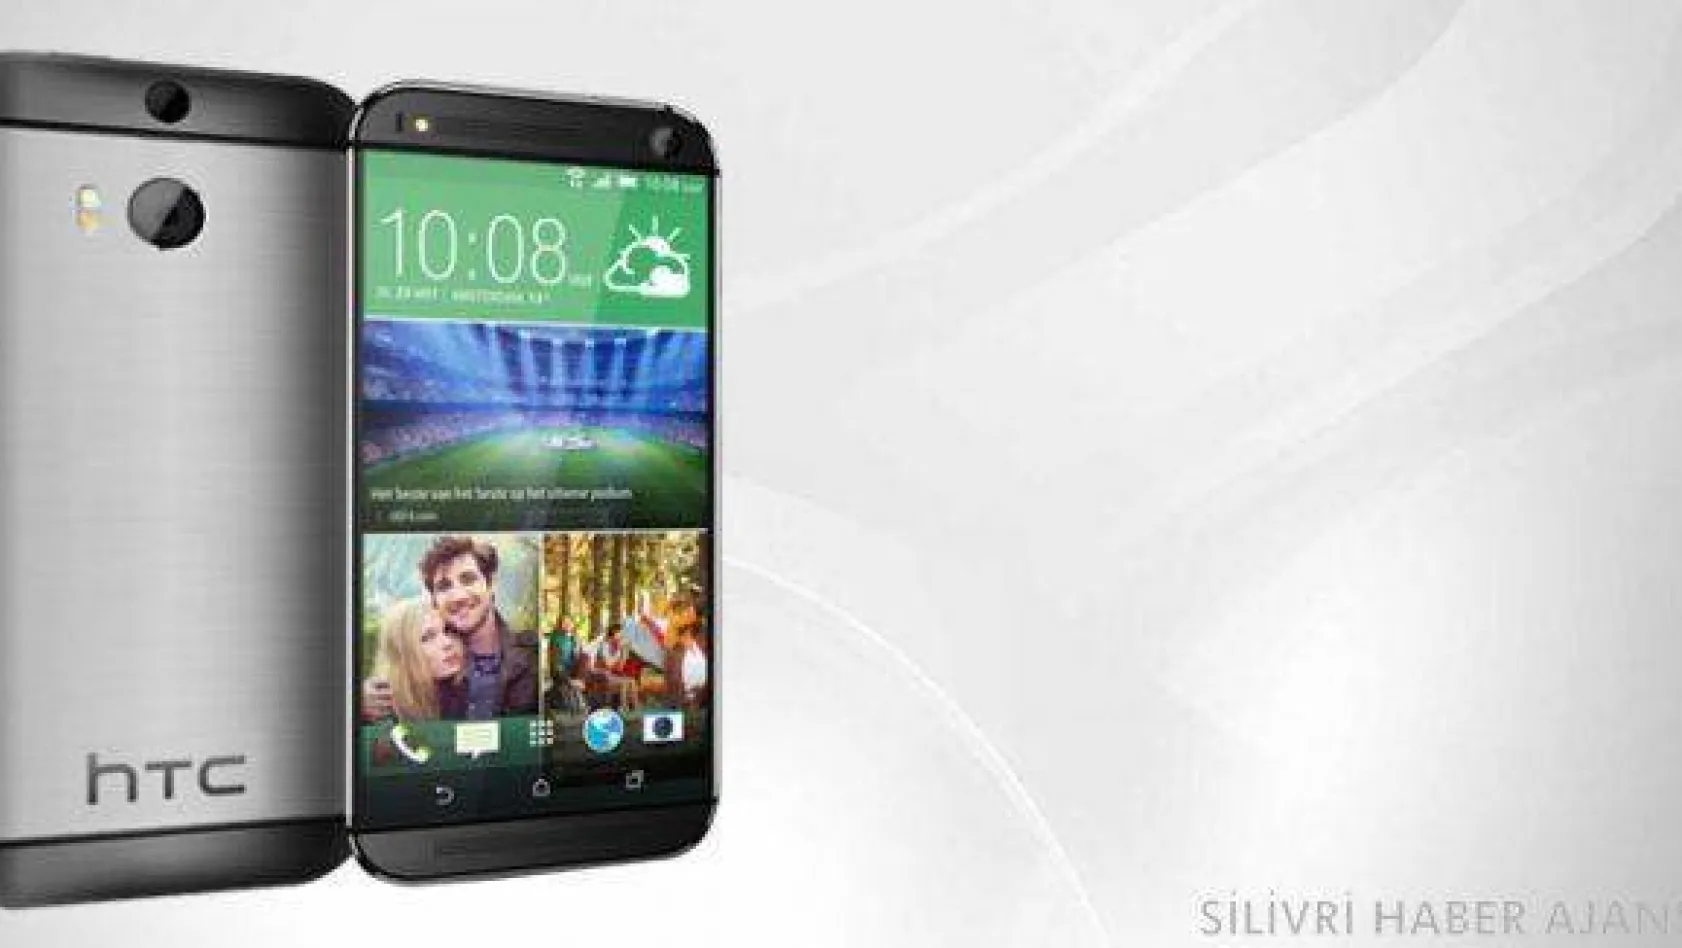 HTC One M9 resmen tanıtıldı